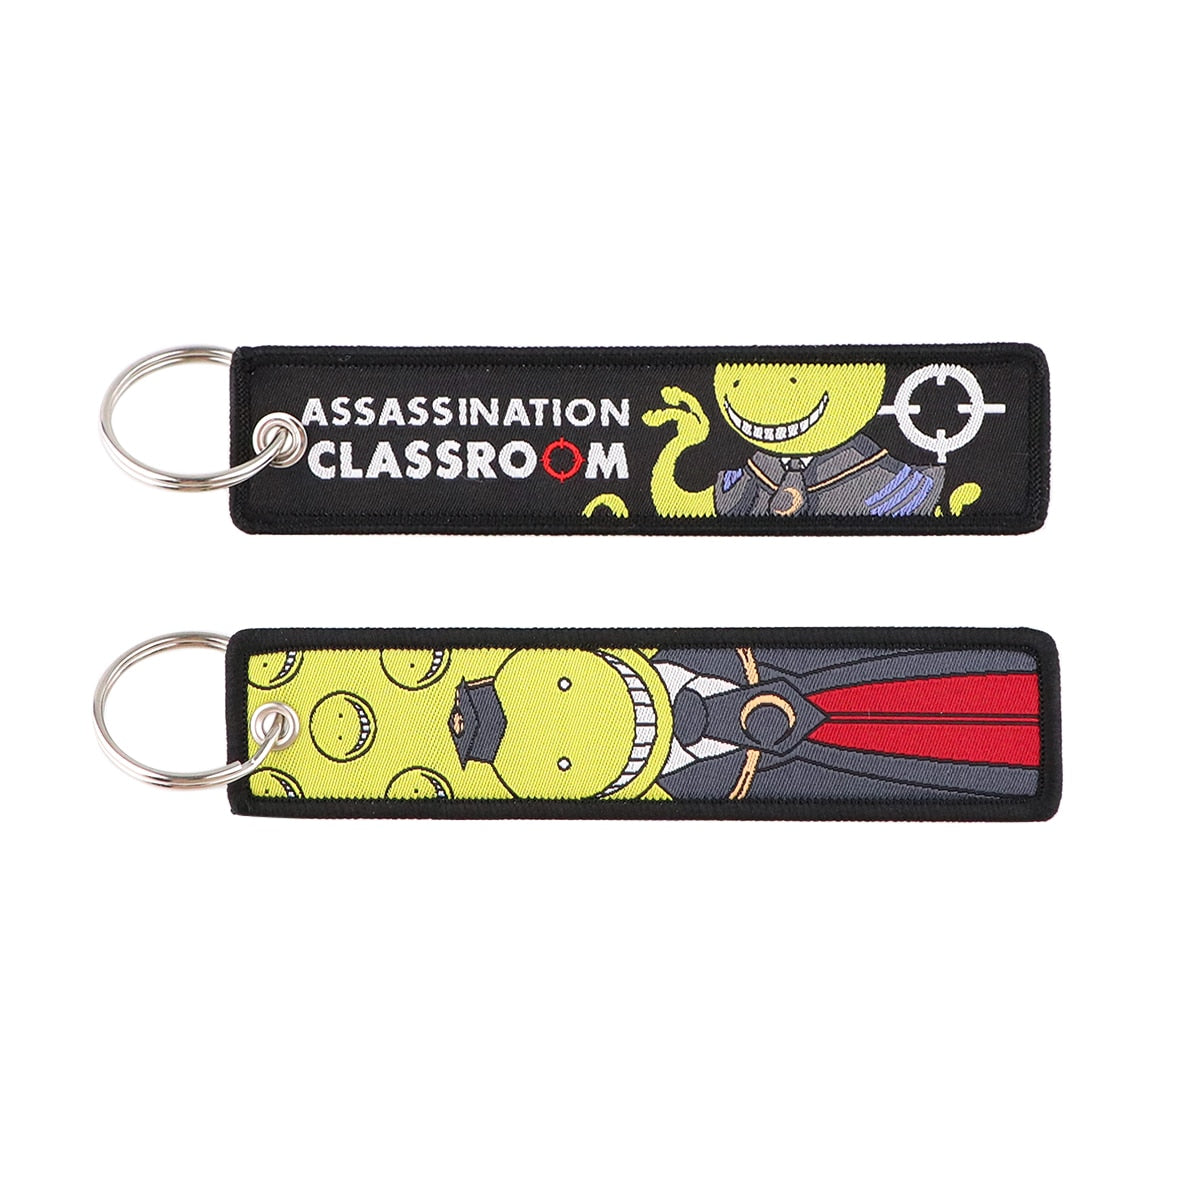 Assassination Classroom - Headmaster Keychain